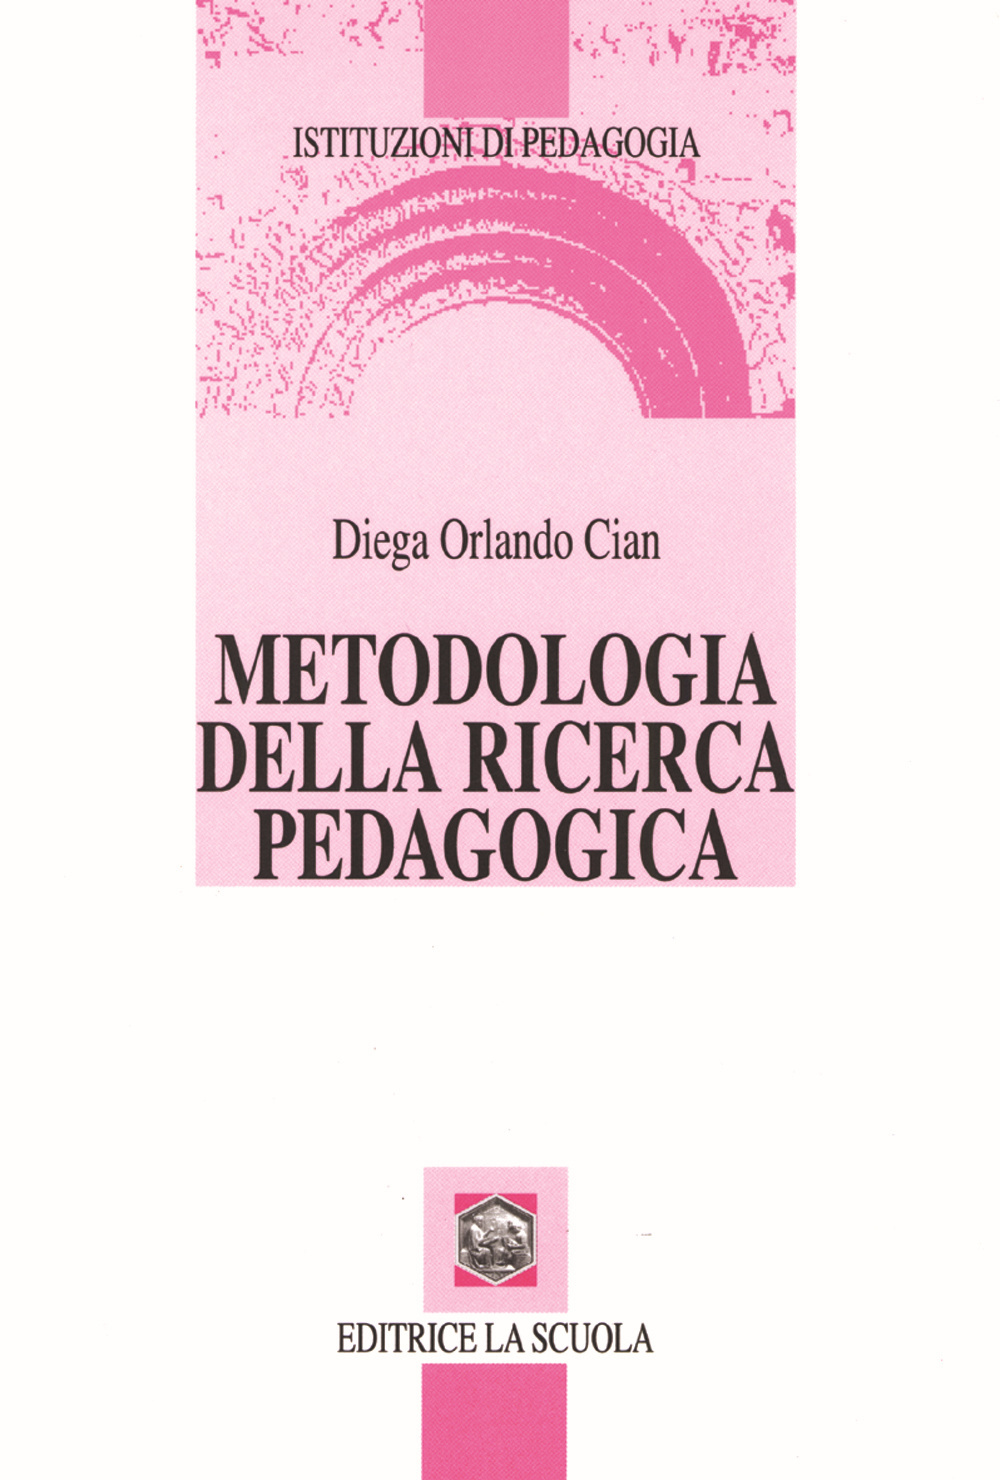 Metodologia della ricerca pedagogica